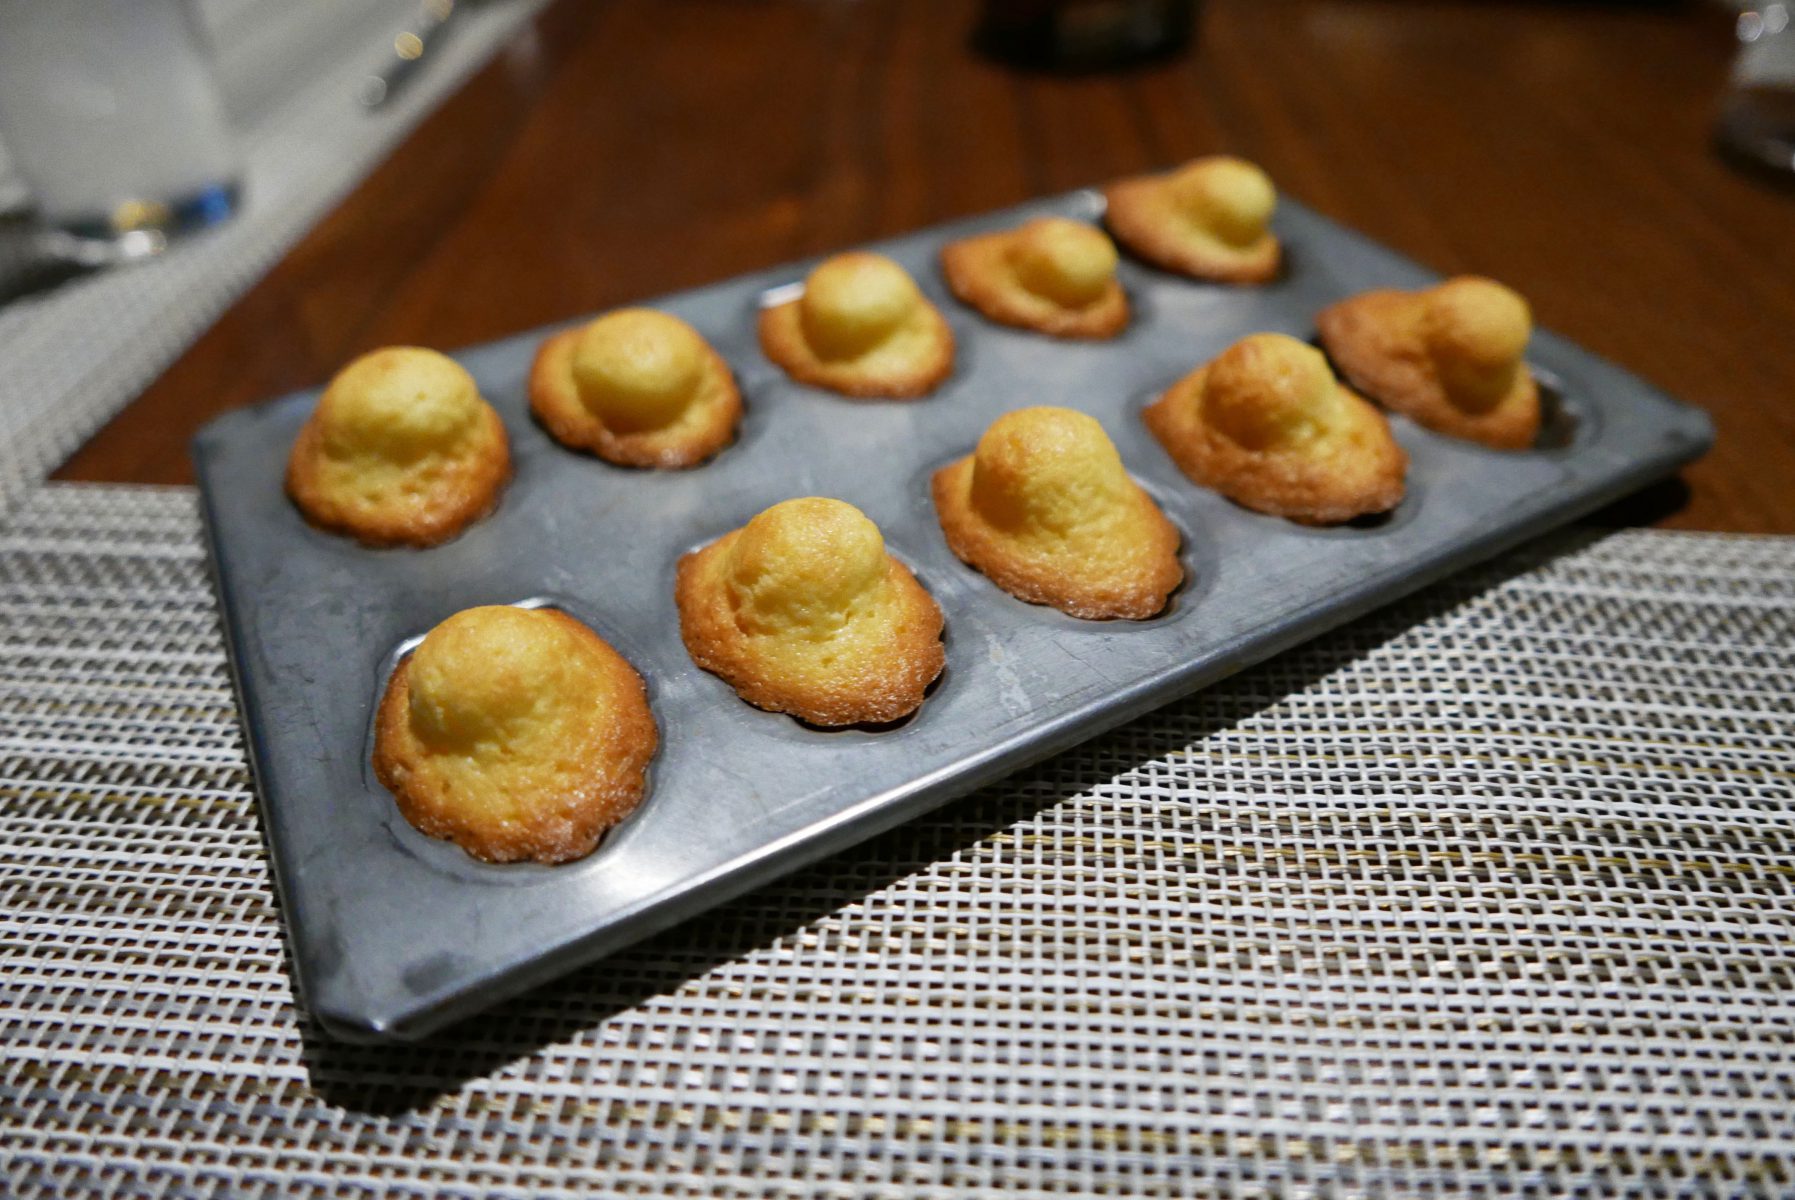 Freshly baked madeleines